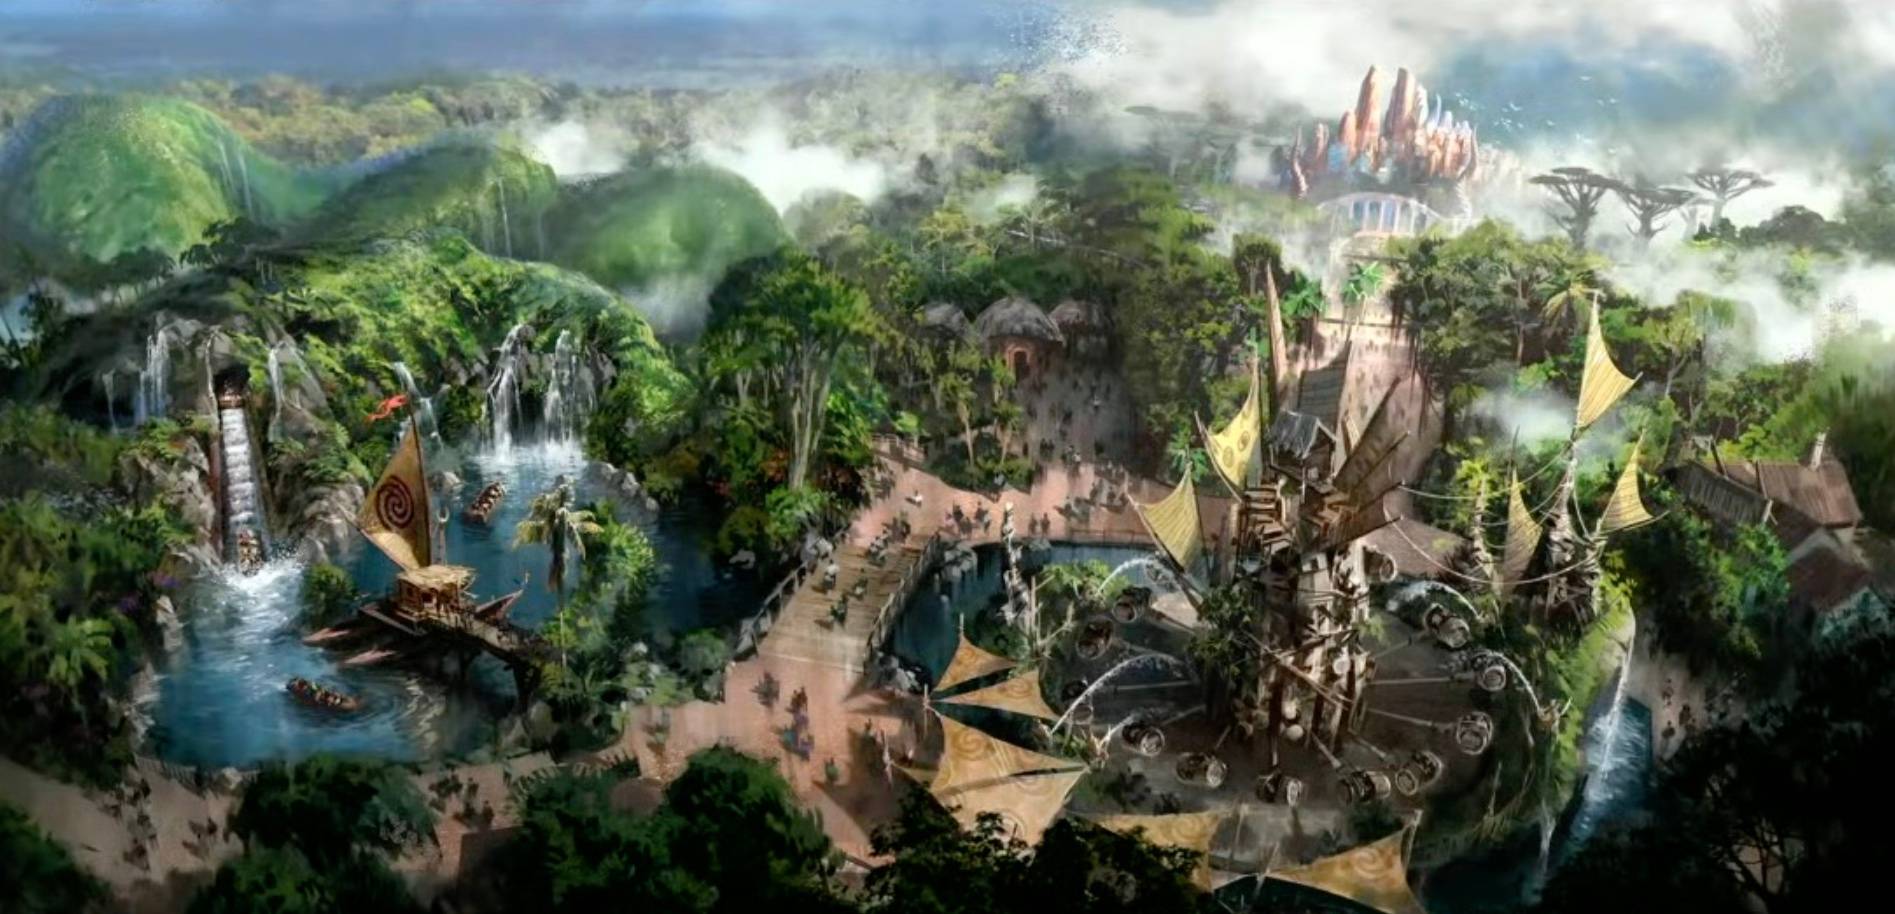 Disney previews model of Encanto and Indiana Jones expansion at Disney's Animal Kingdom